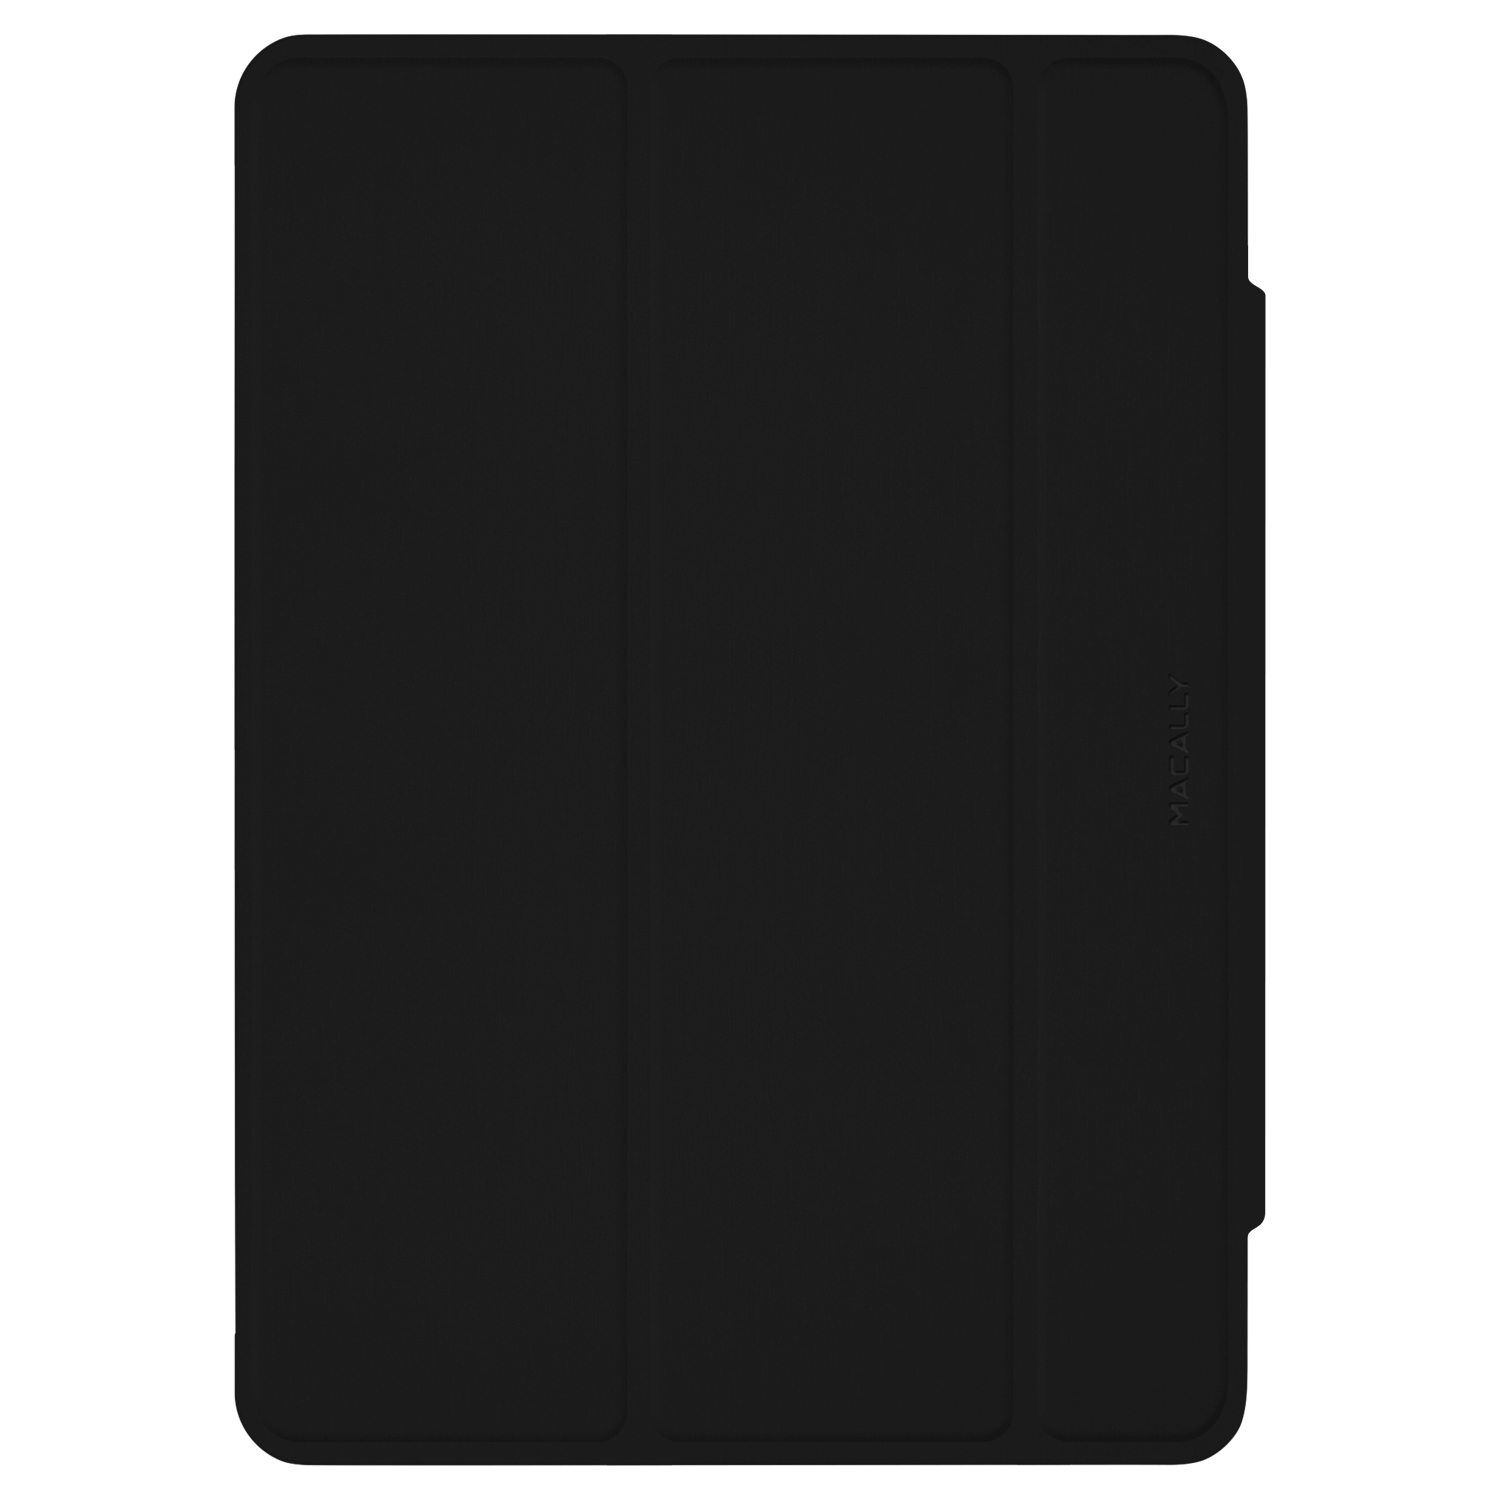 Smart case черный. IPAD Air 4 Black чехол. IPAD 10.9 Smart Case Black (2021). Чехол для IPAD Mini 5 черный. IPAD Pro 11" 2020 чехол с магнитом Zibelino Tablet Black.